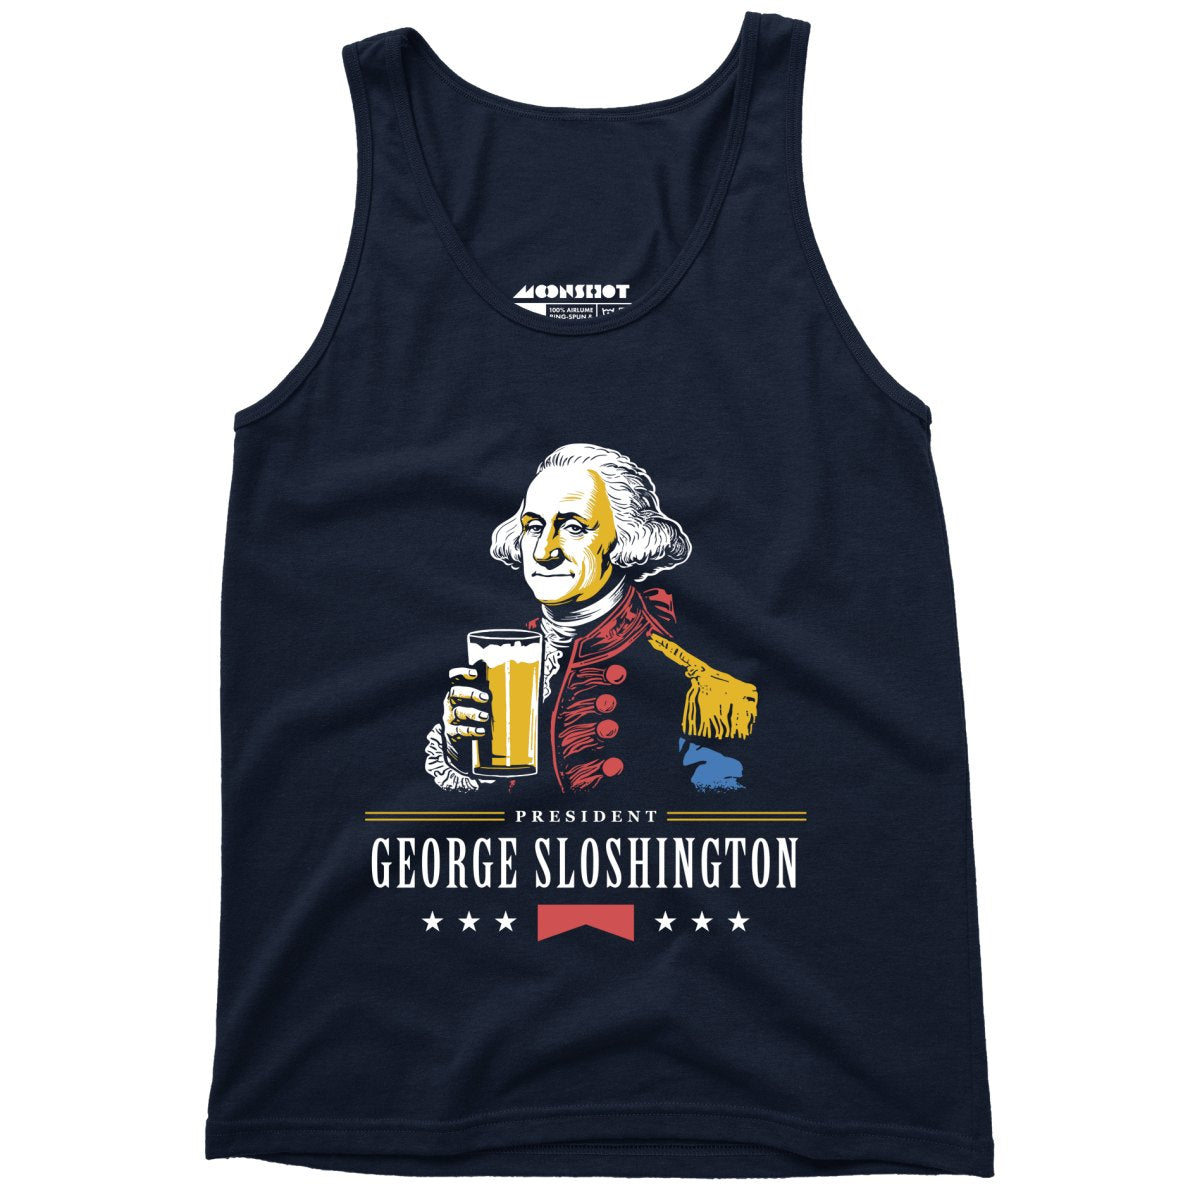 President George Sloshington - Unisex Tank Top